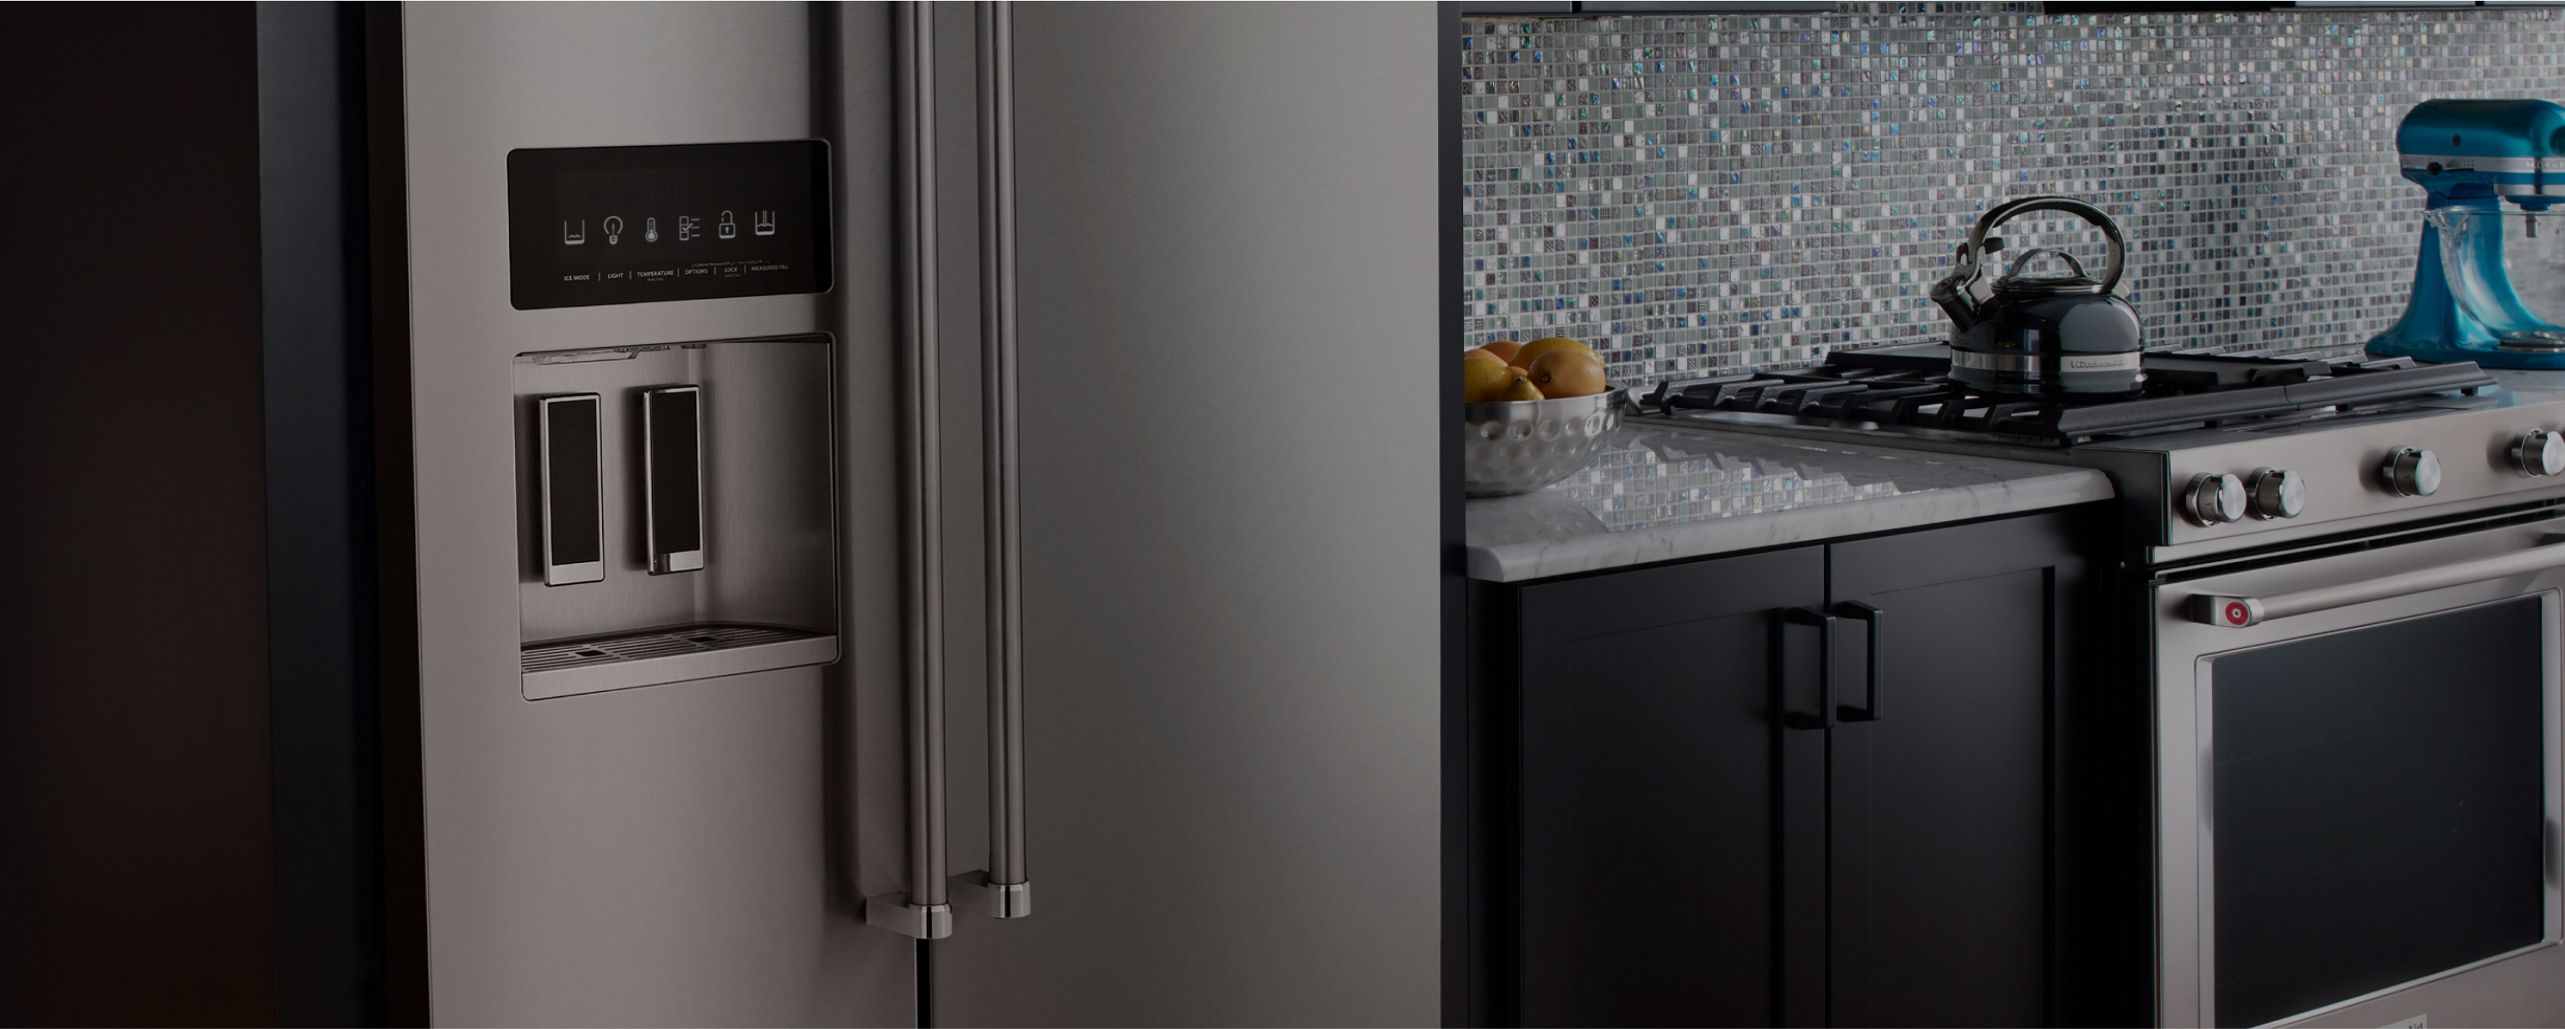 KitchenAid side-by-side refrigerator.